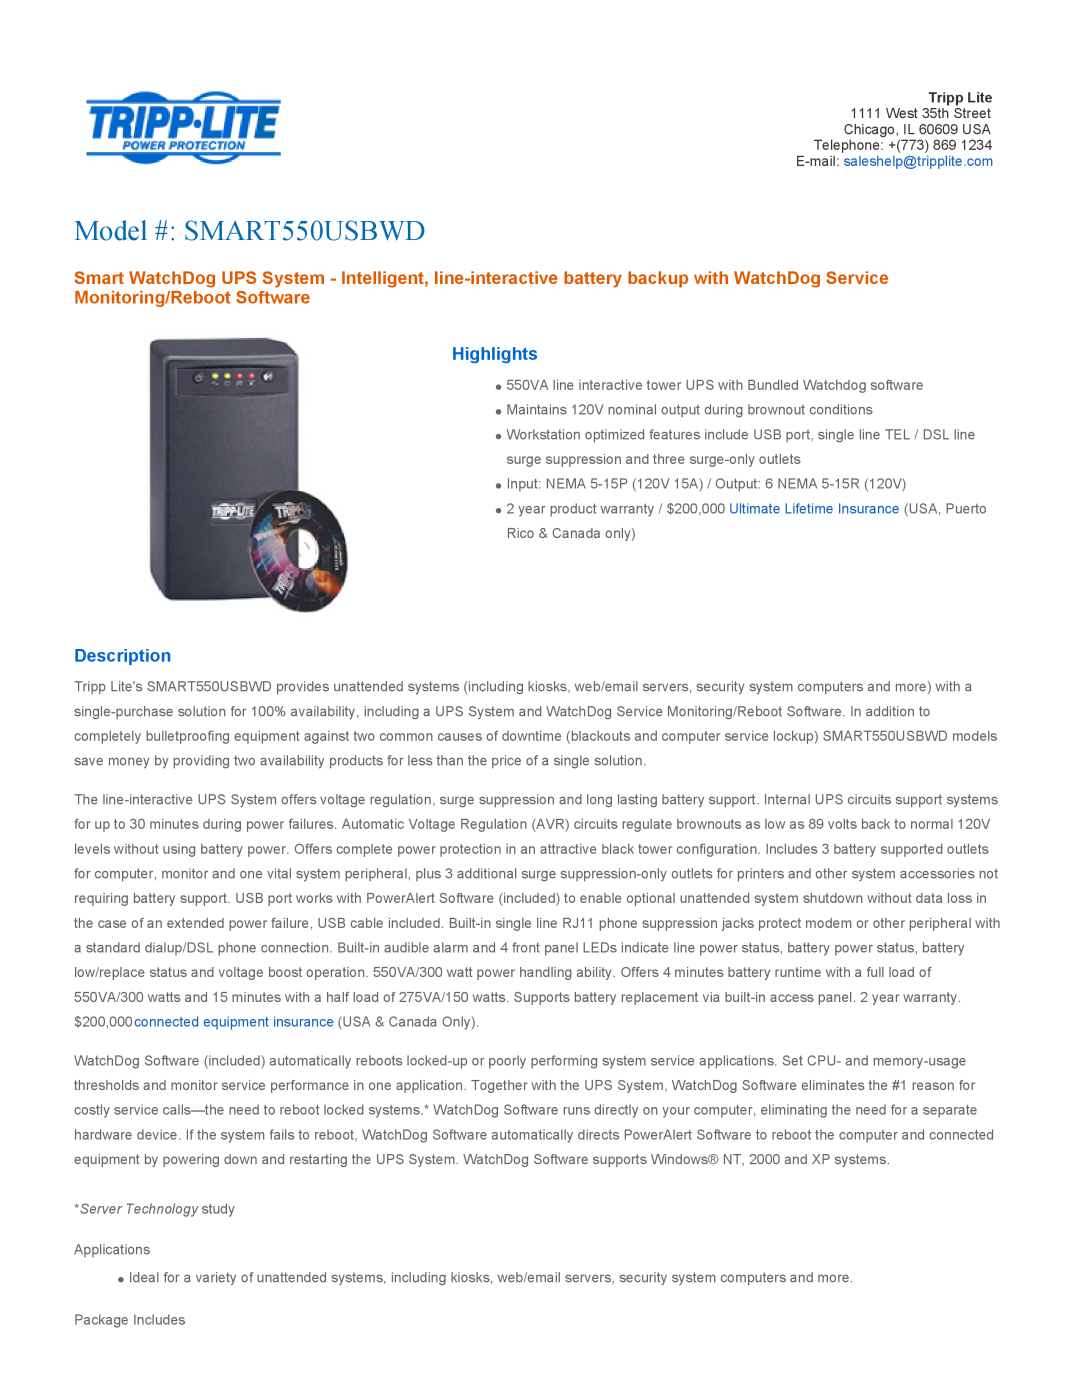 Tripp Lite warranty Highlights, Description, Model # SMART550USBWD, Server Technology study 